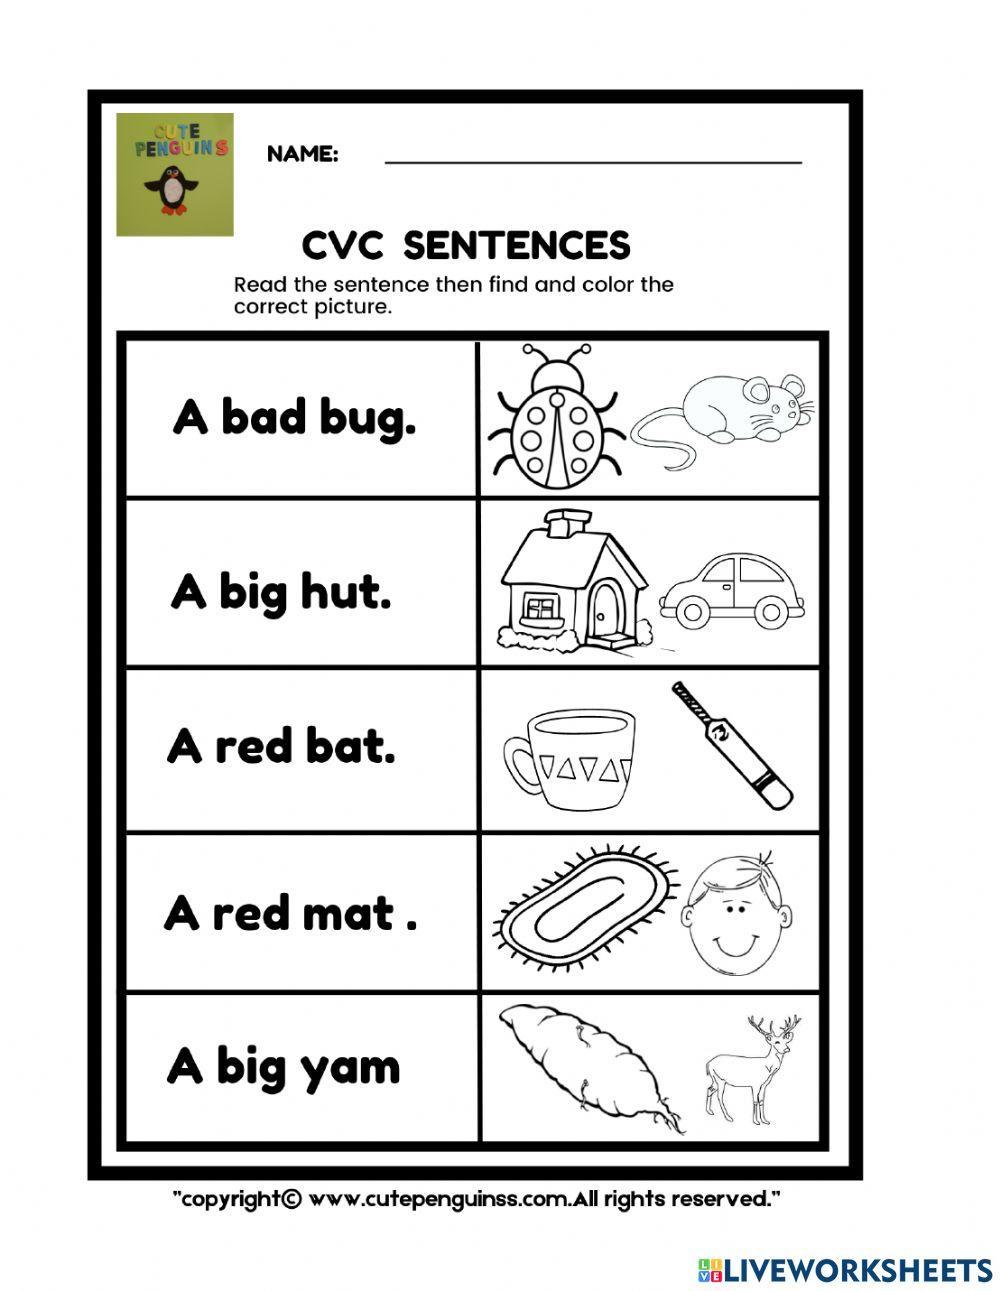 Cvc words & sentences